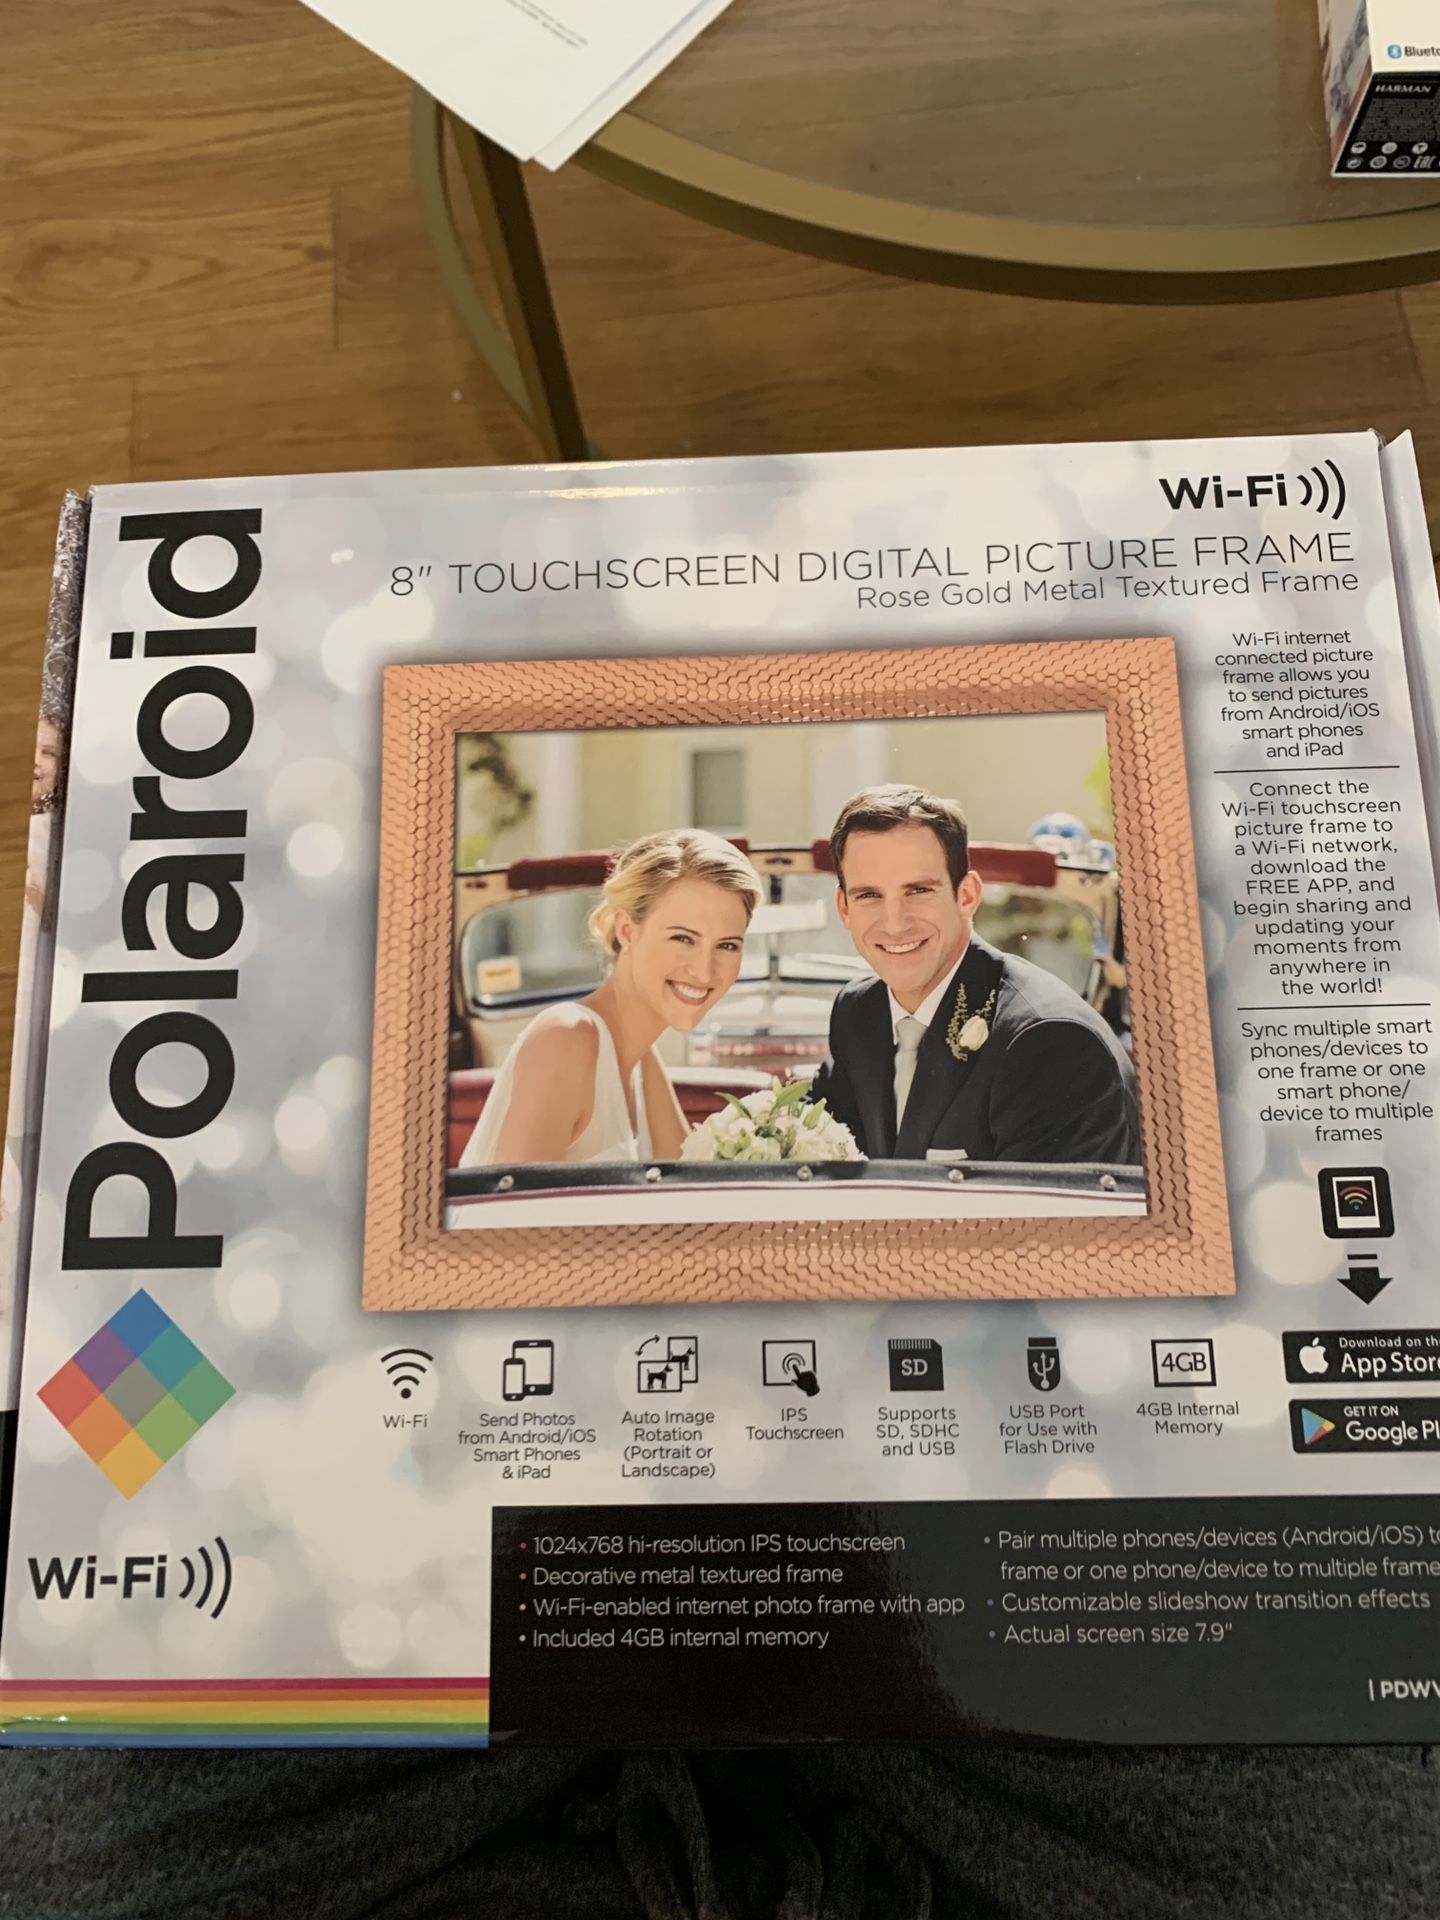 Polaroid 8” touchscreen digital picture frame